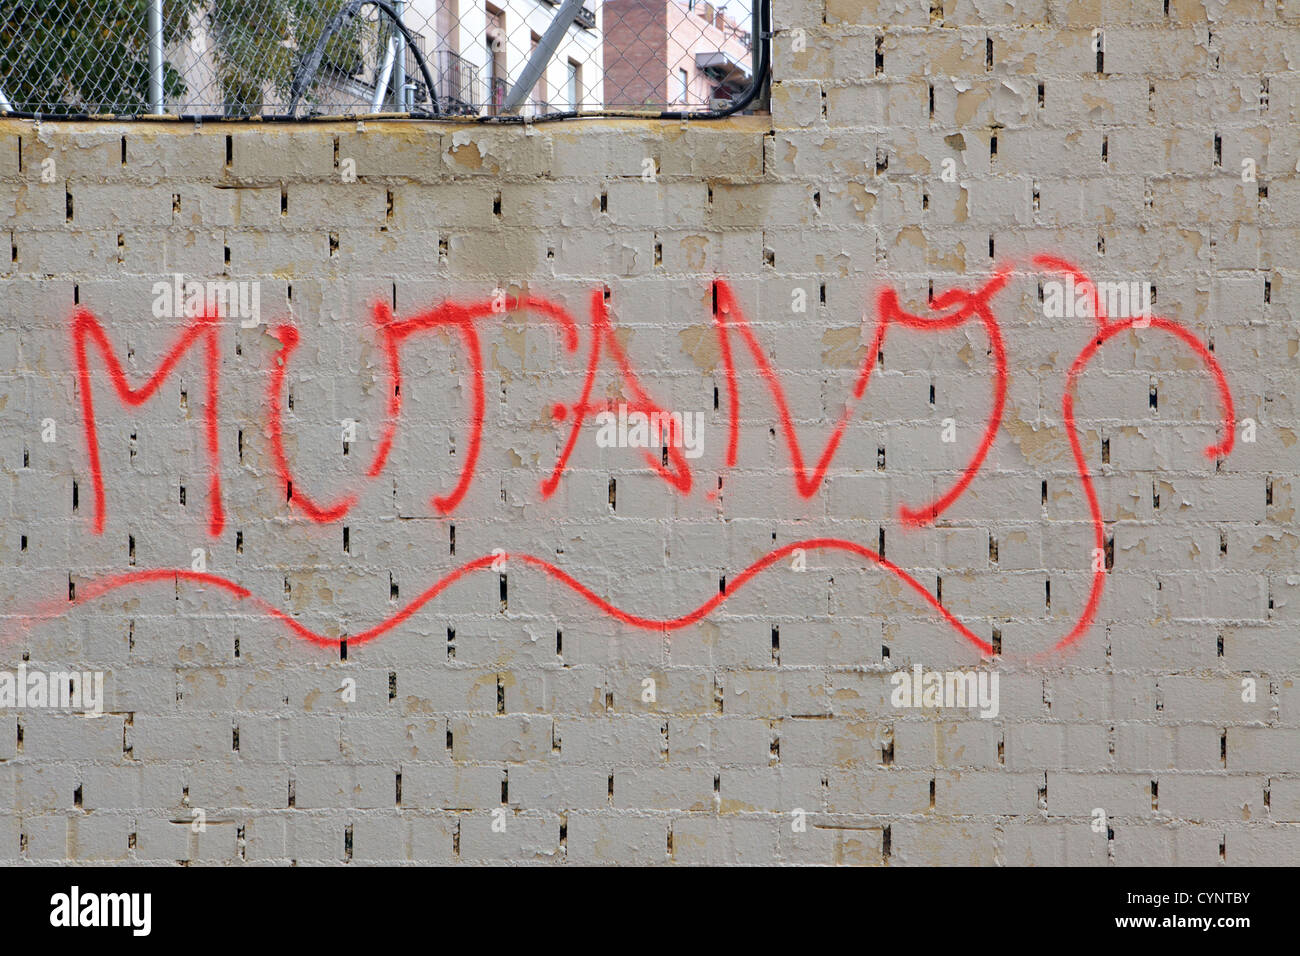 Mutants Street art, graffiti, wall painting, self-expression, Madrid, Spain, Espana Stock Photo